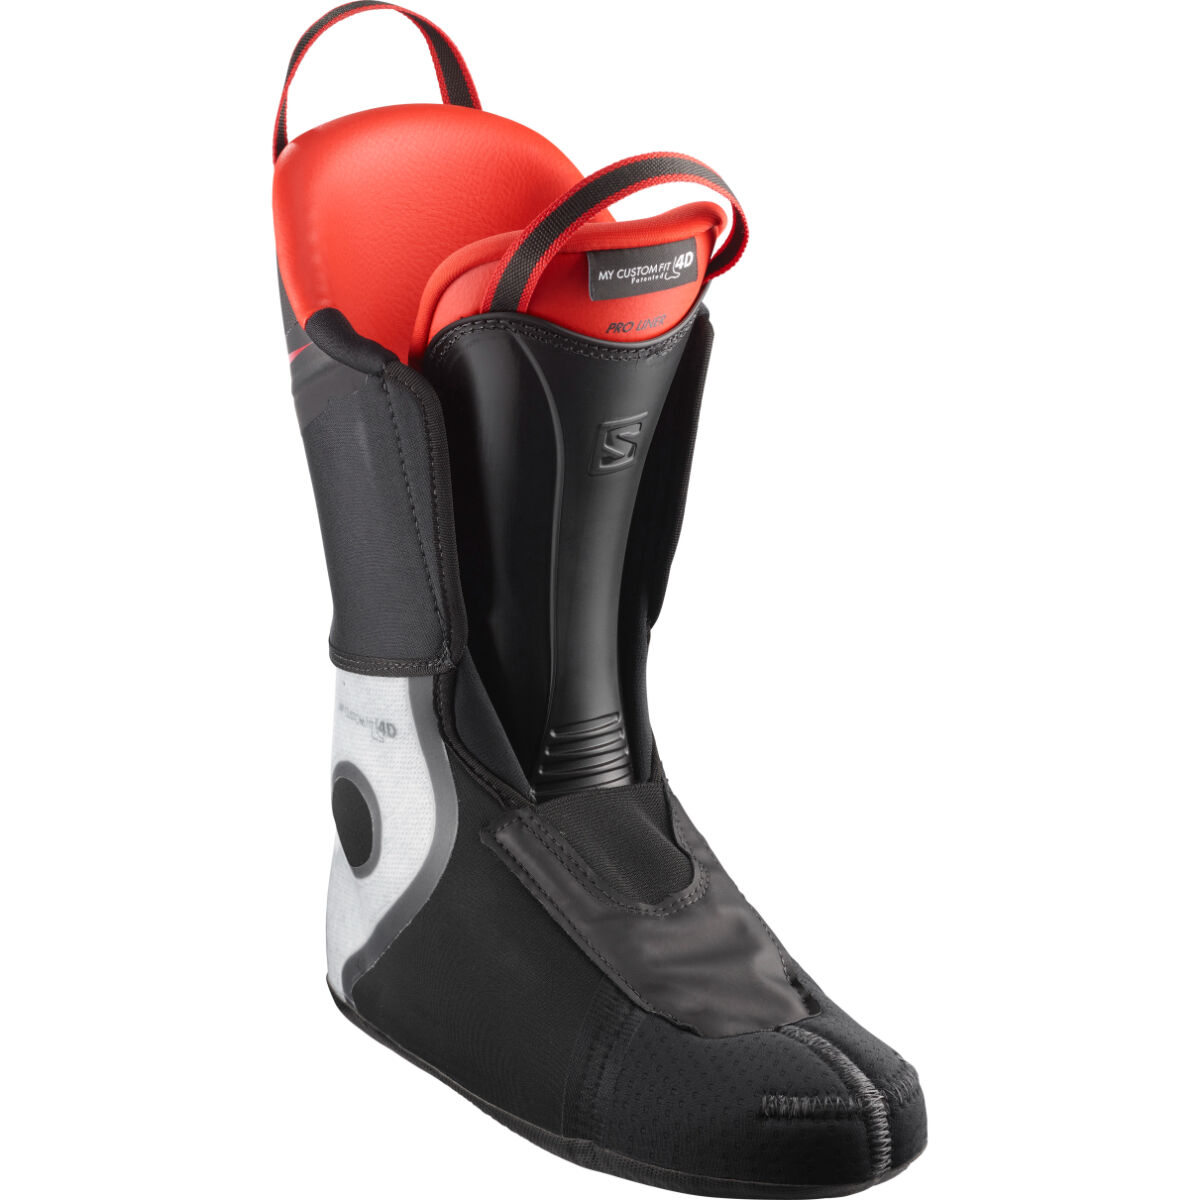 Salomon S​/Pro 120 GW Ski Boots | Christy Sports